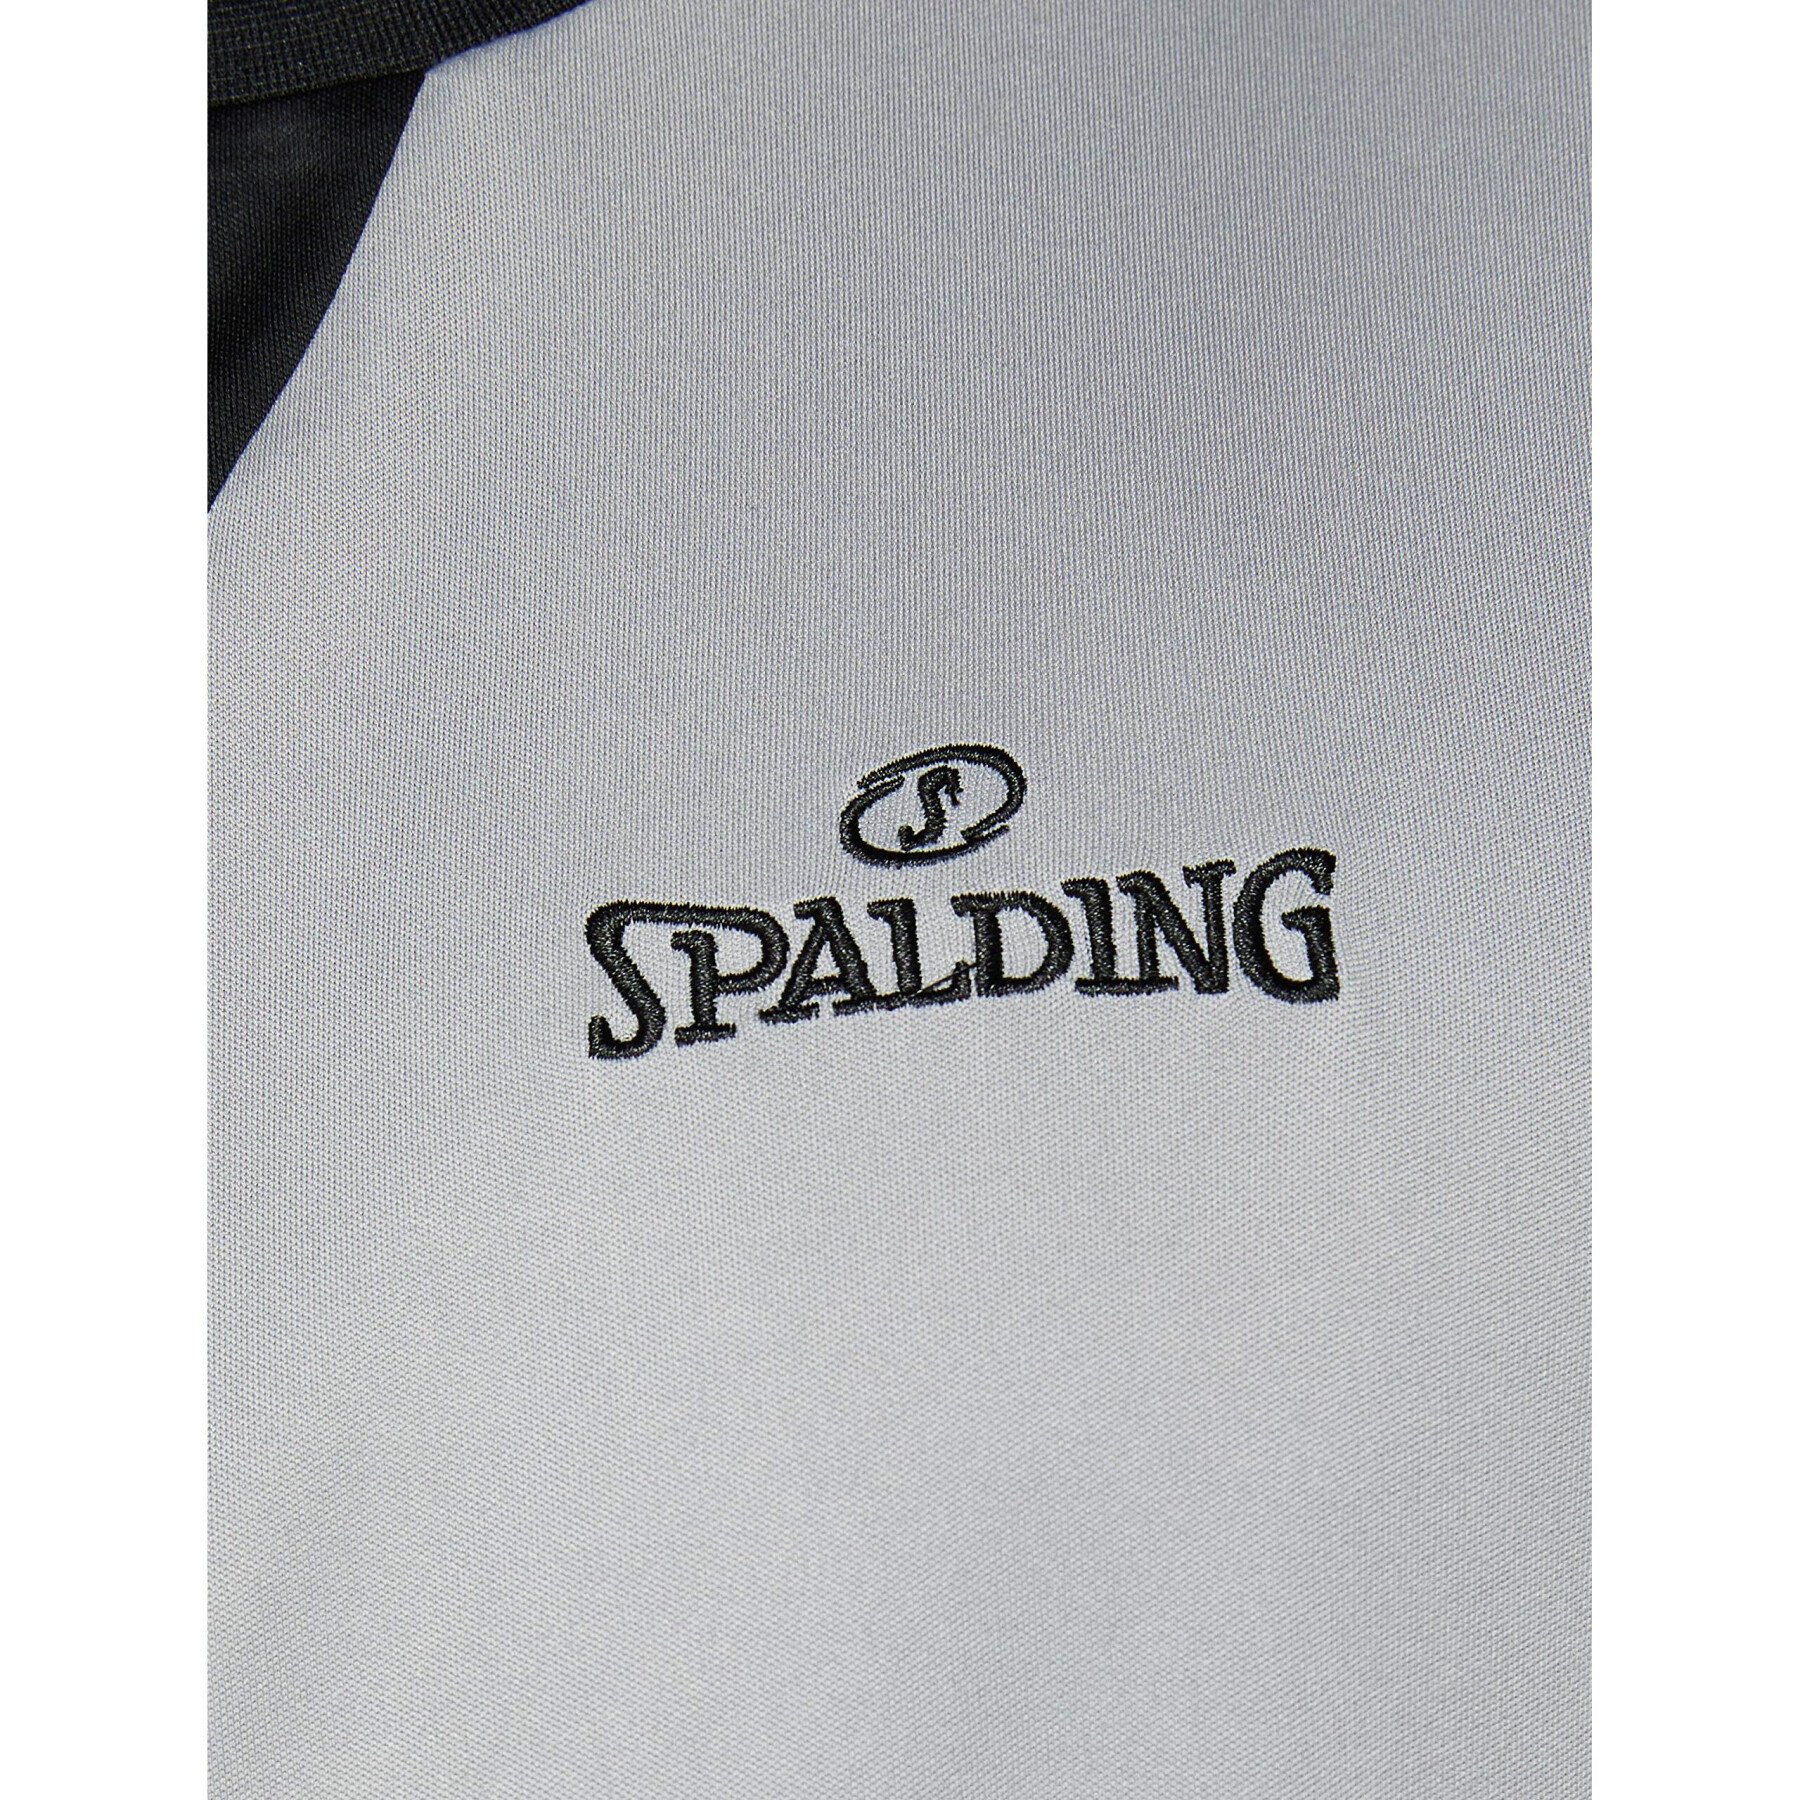 Maillot arbitre Spalding Classic